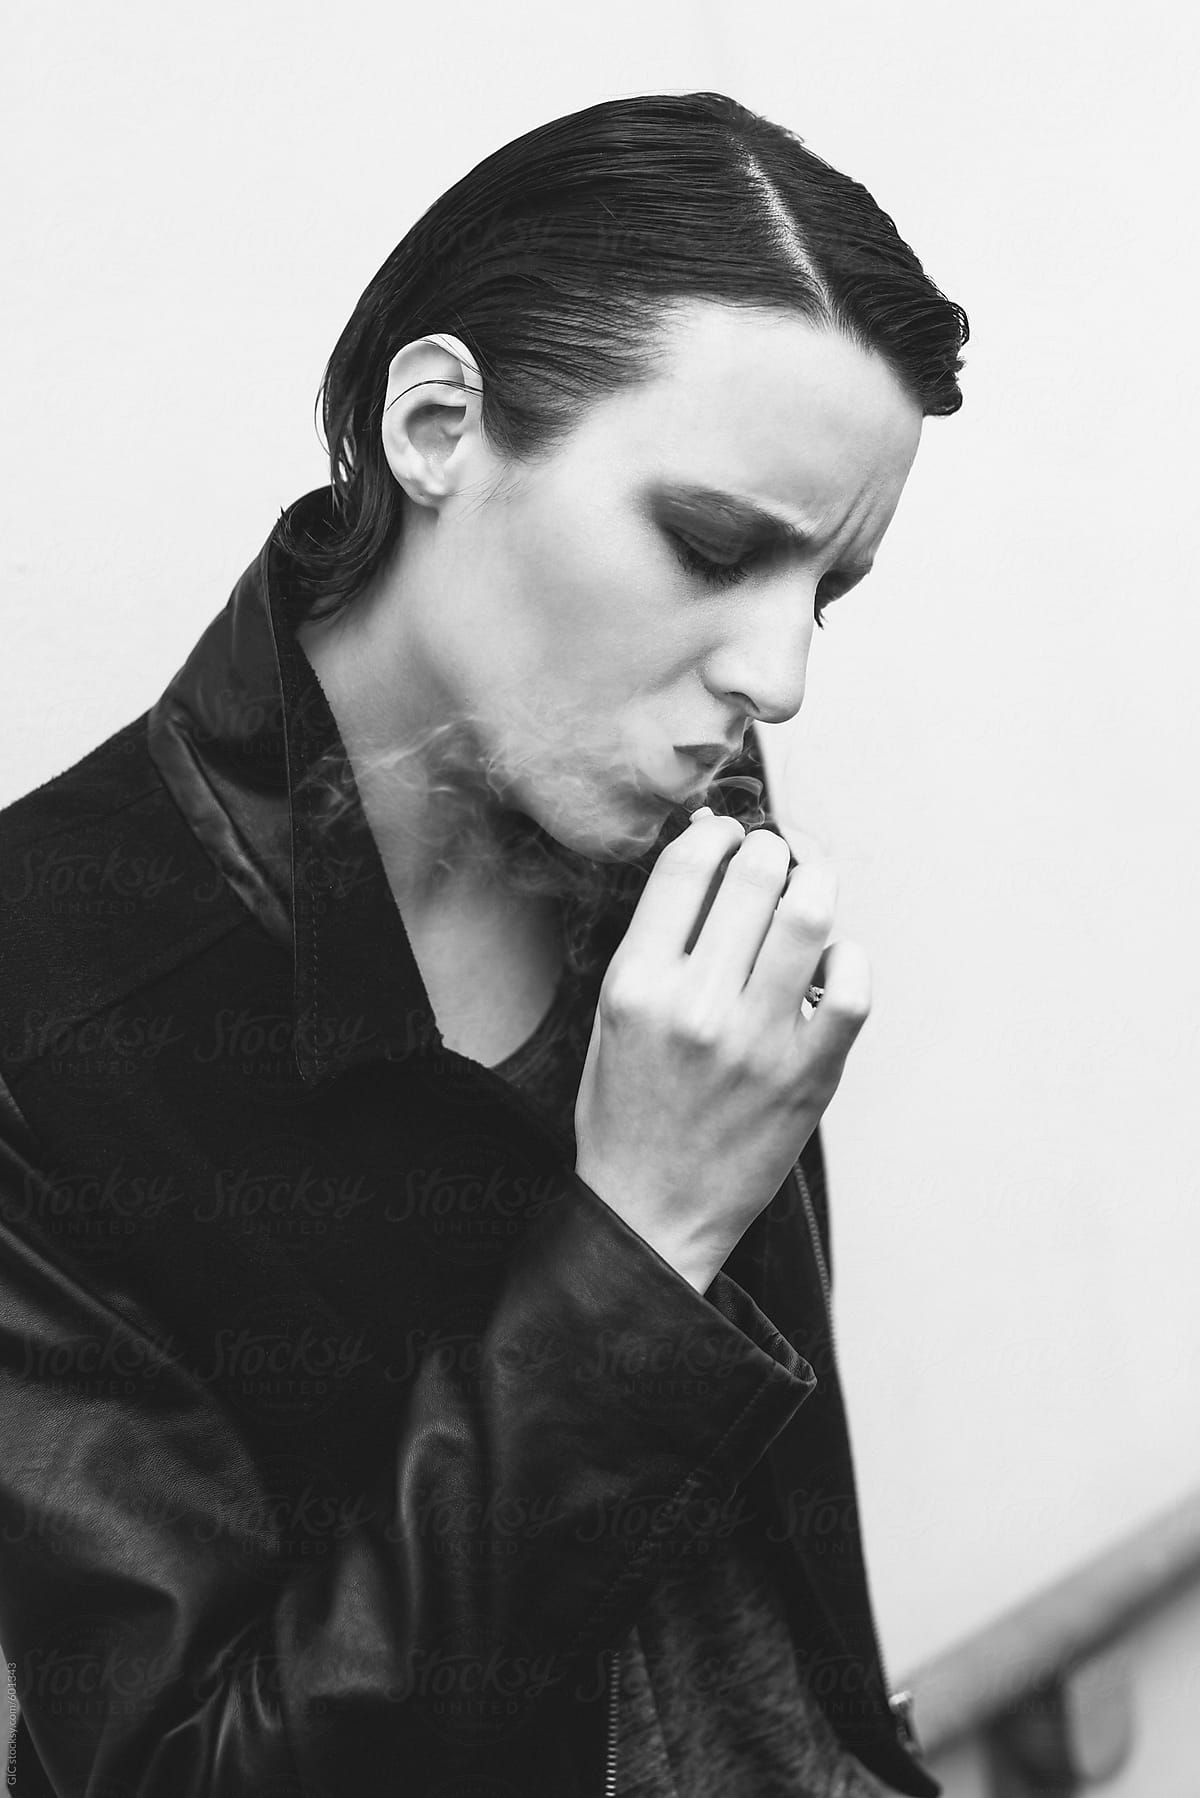 Young Punk Rocker Smoking A Cigarette By Stocksy Contributor Simone